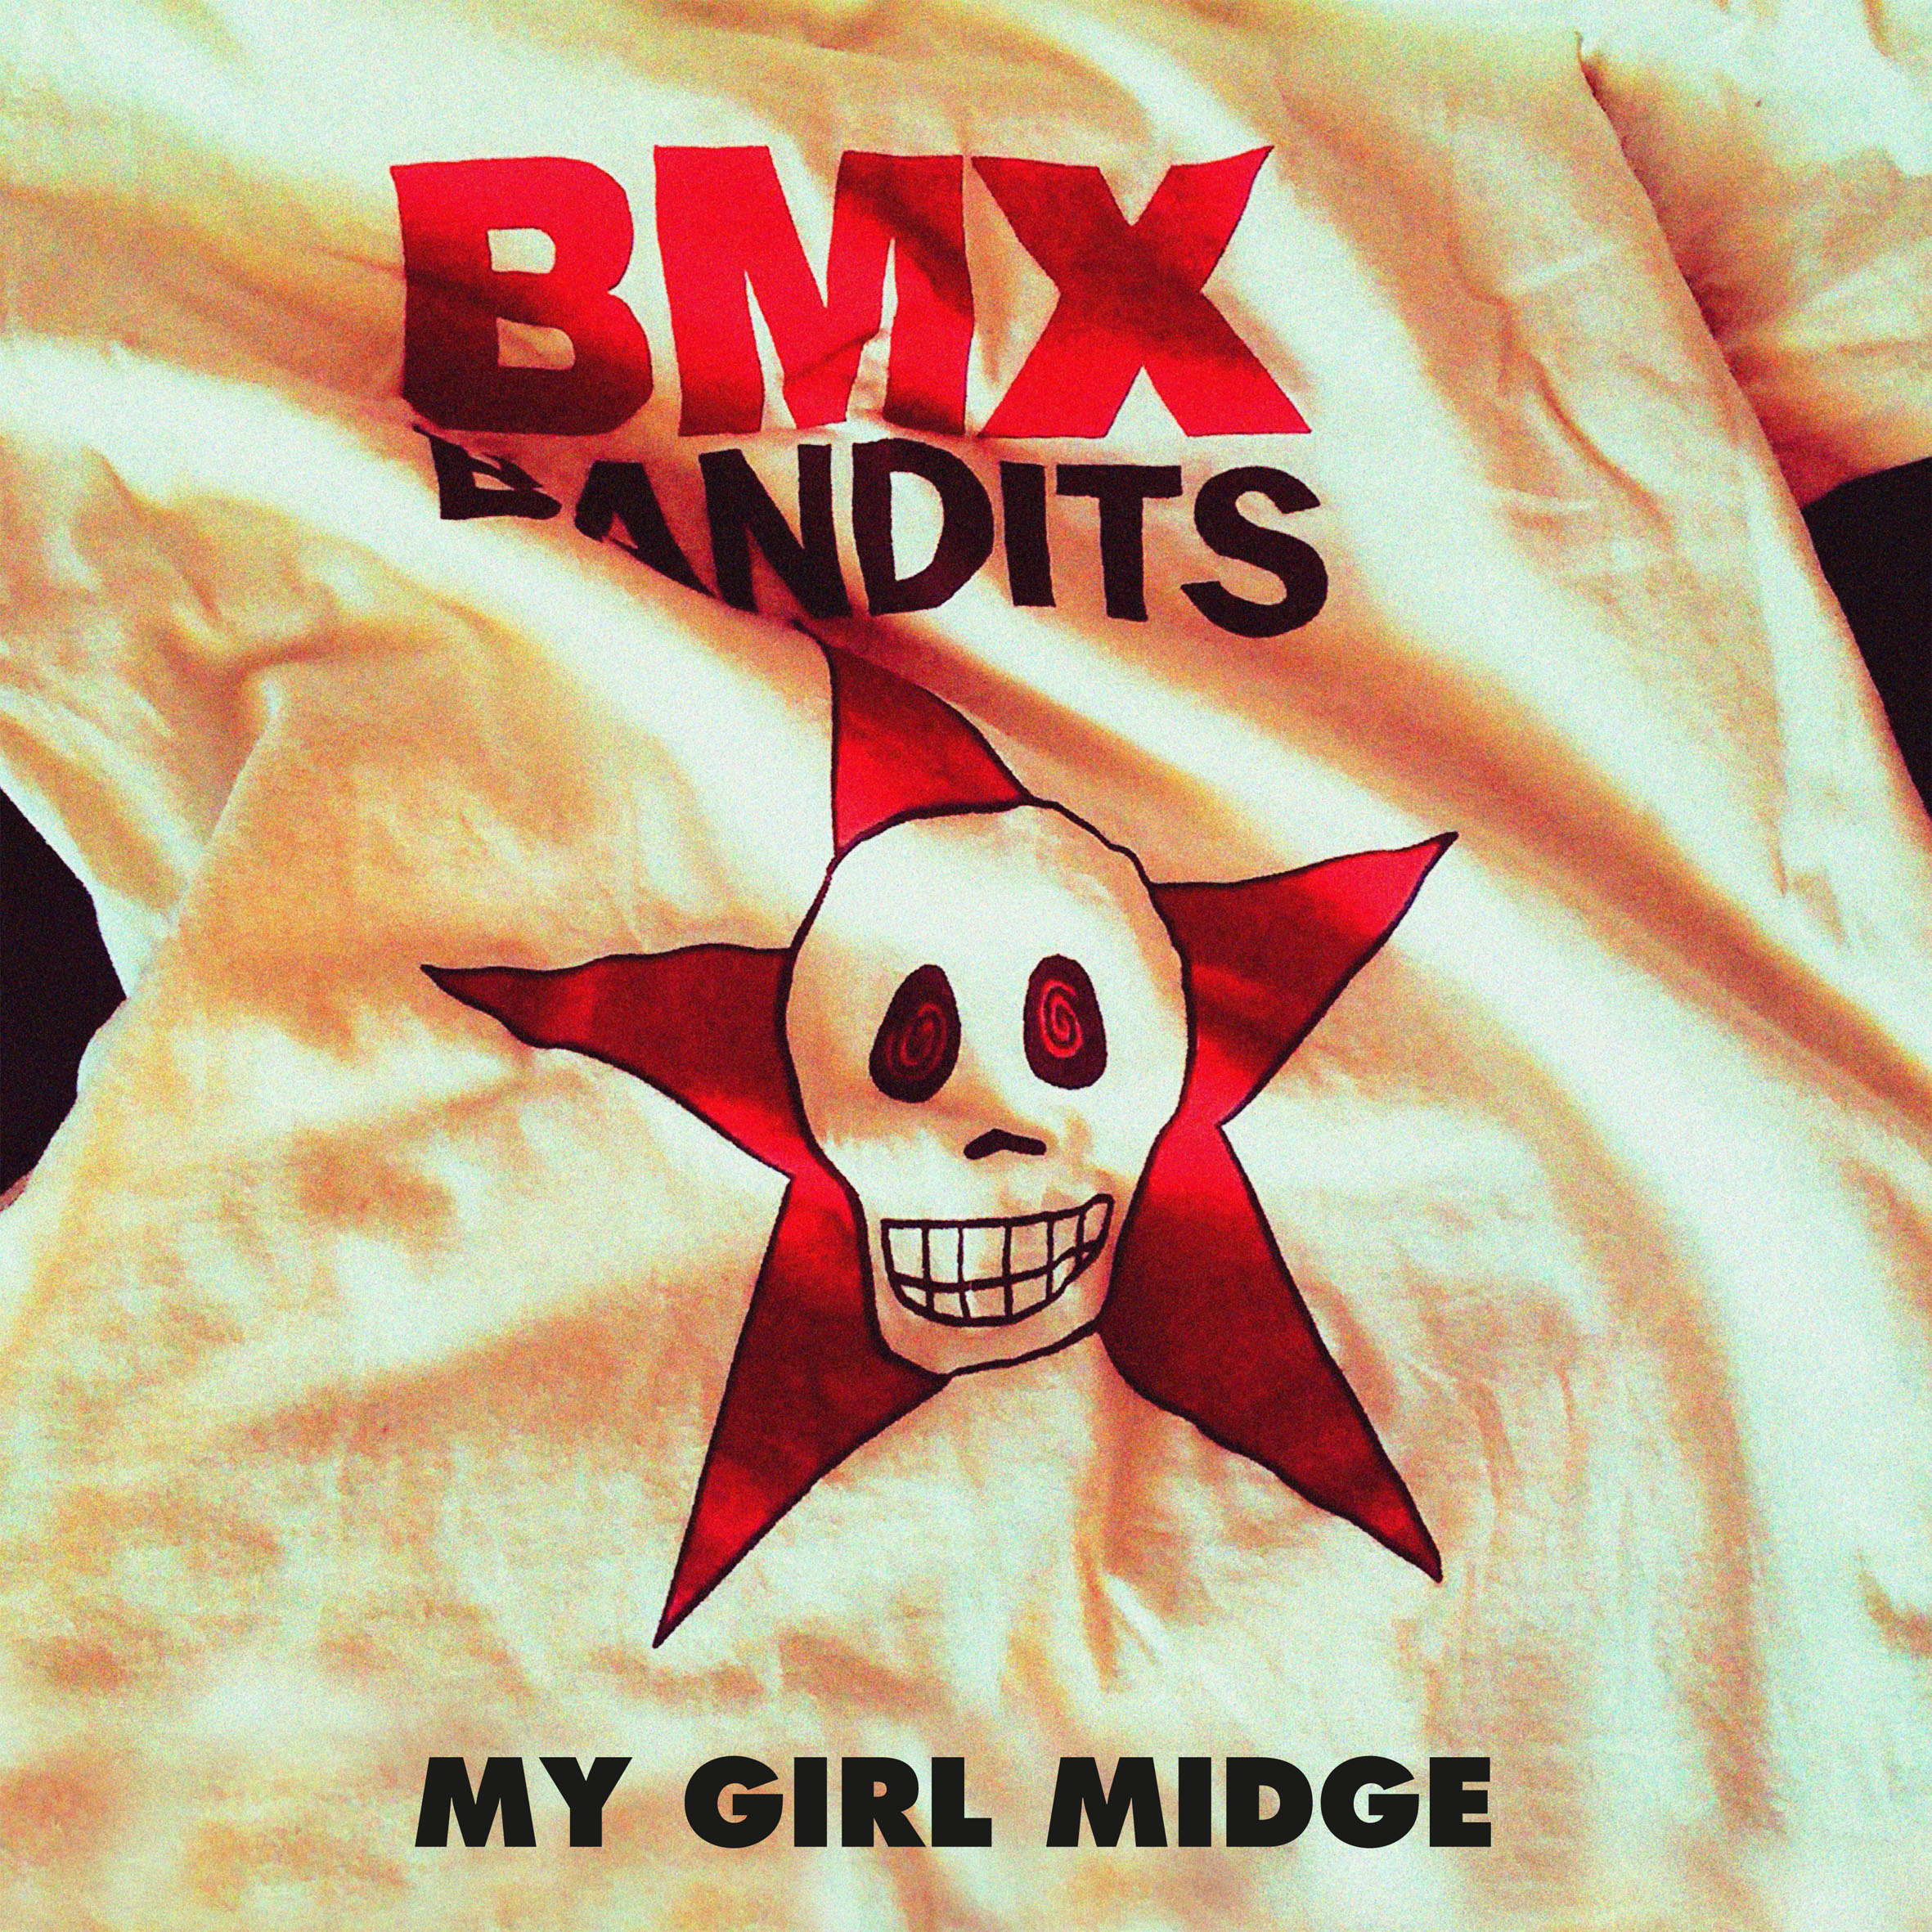 BMX BANDITS "My Girl Midge" Single Digital